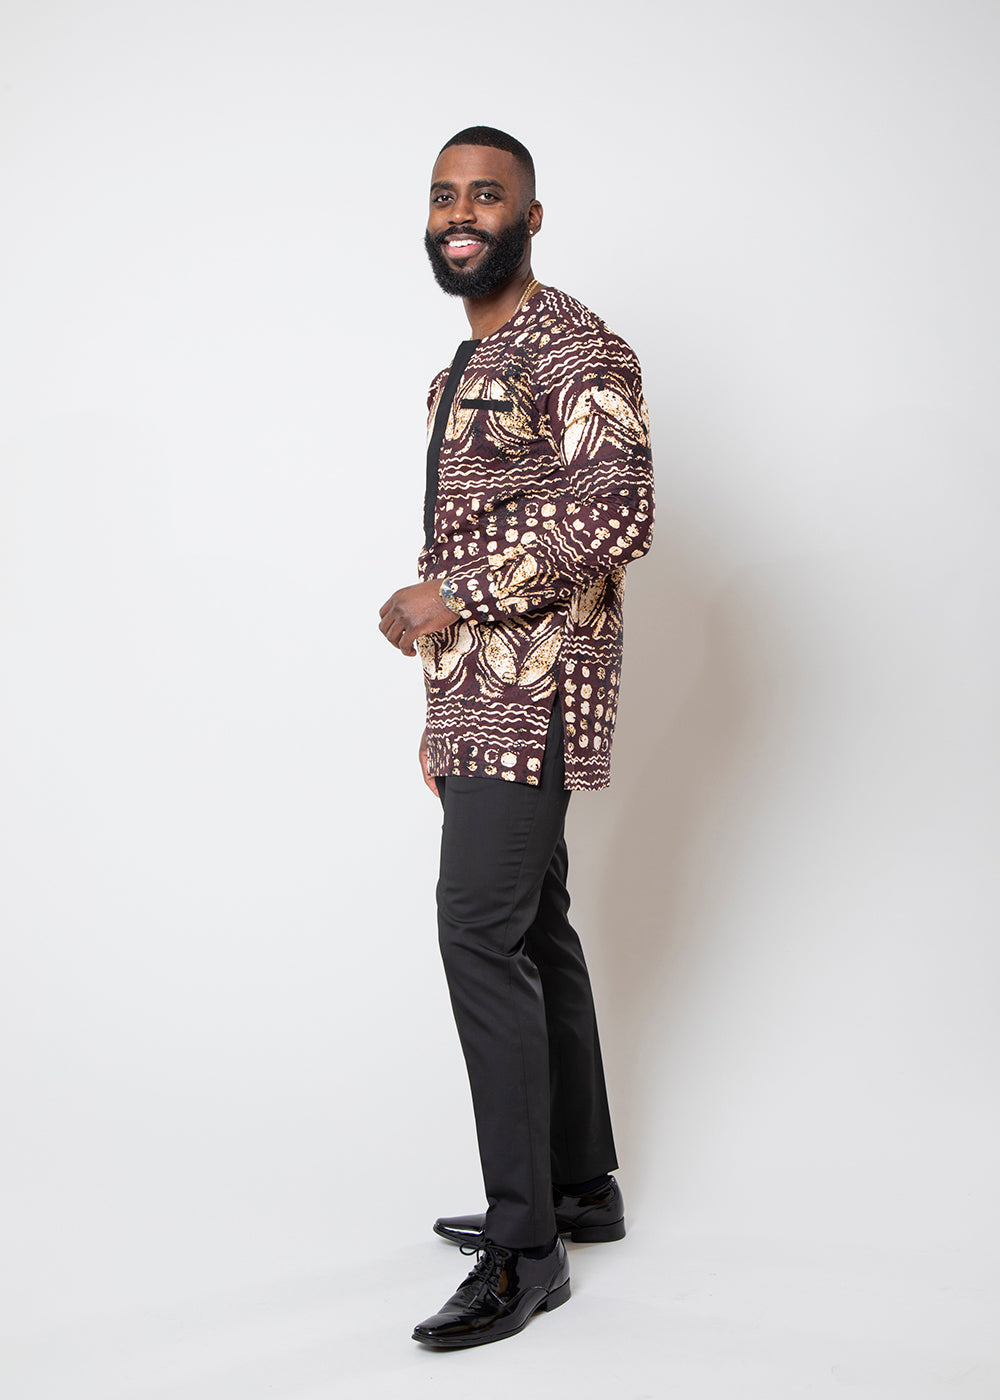 Ibrahim Men's African Print Traditional Shirt (Brown Black Adire)